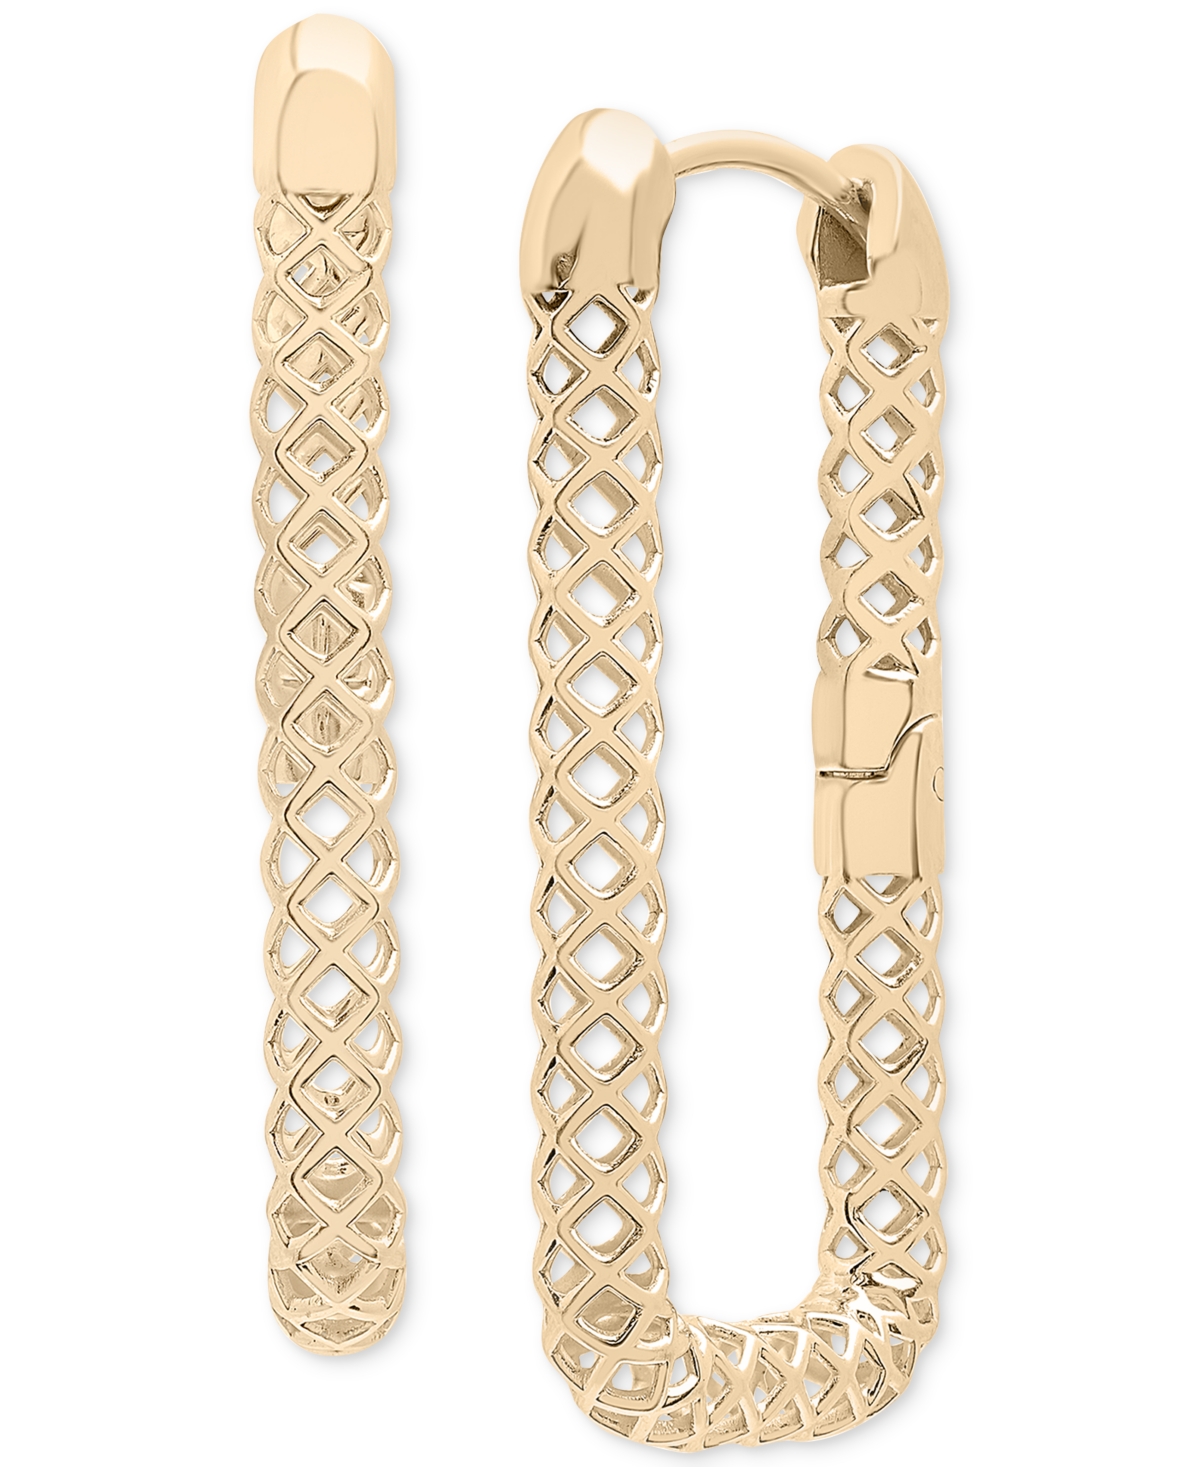 Lattice Rectangular Hoop Earrings in Gold Vermeil, Created for Macy's - Gold Vermeil